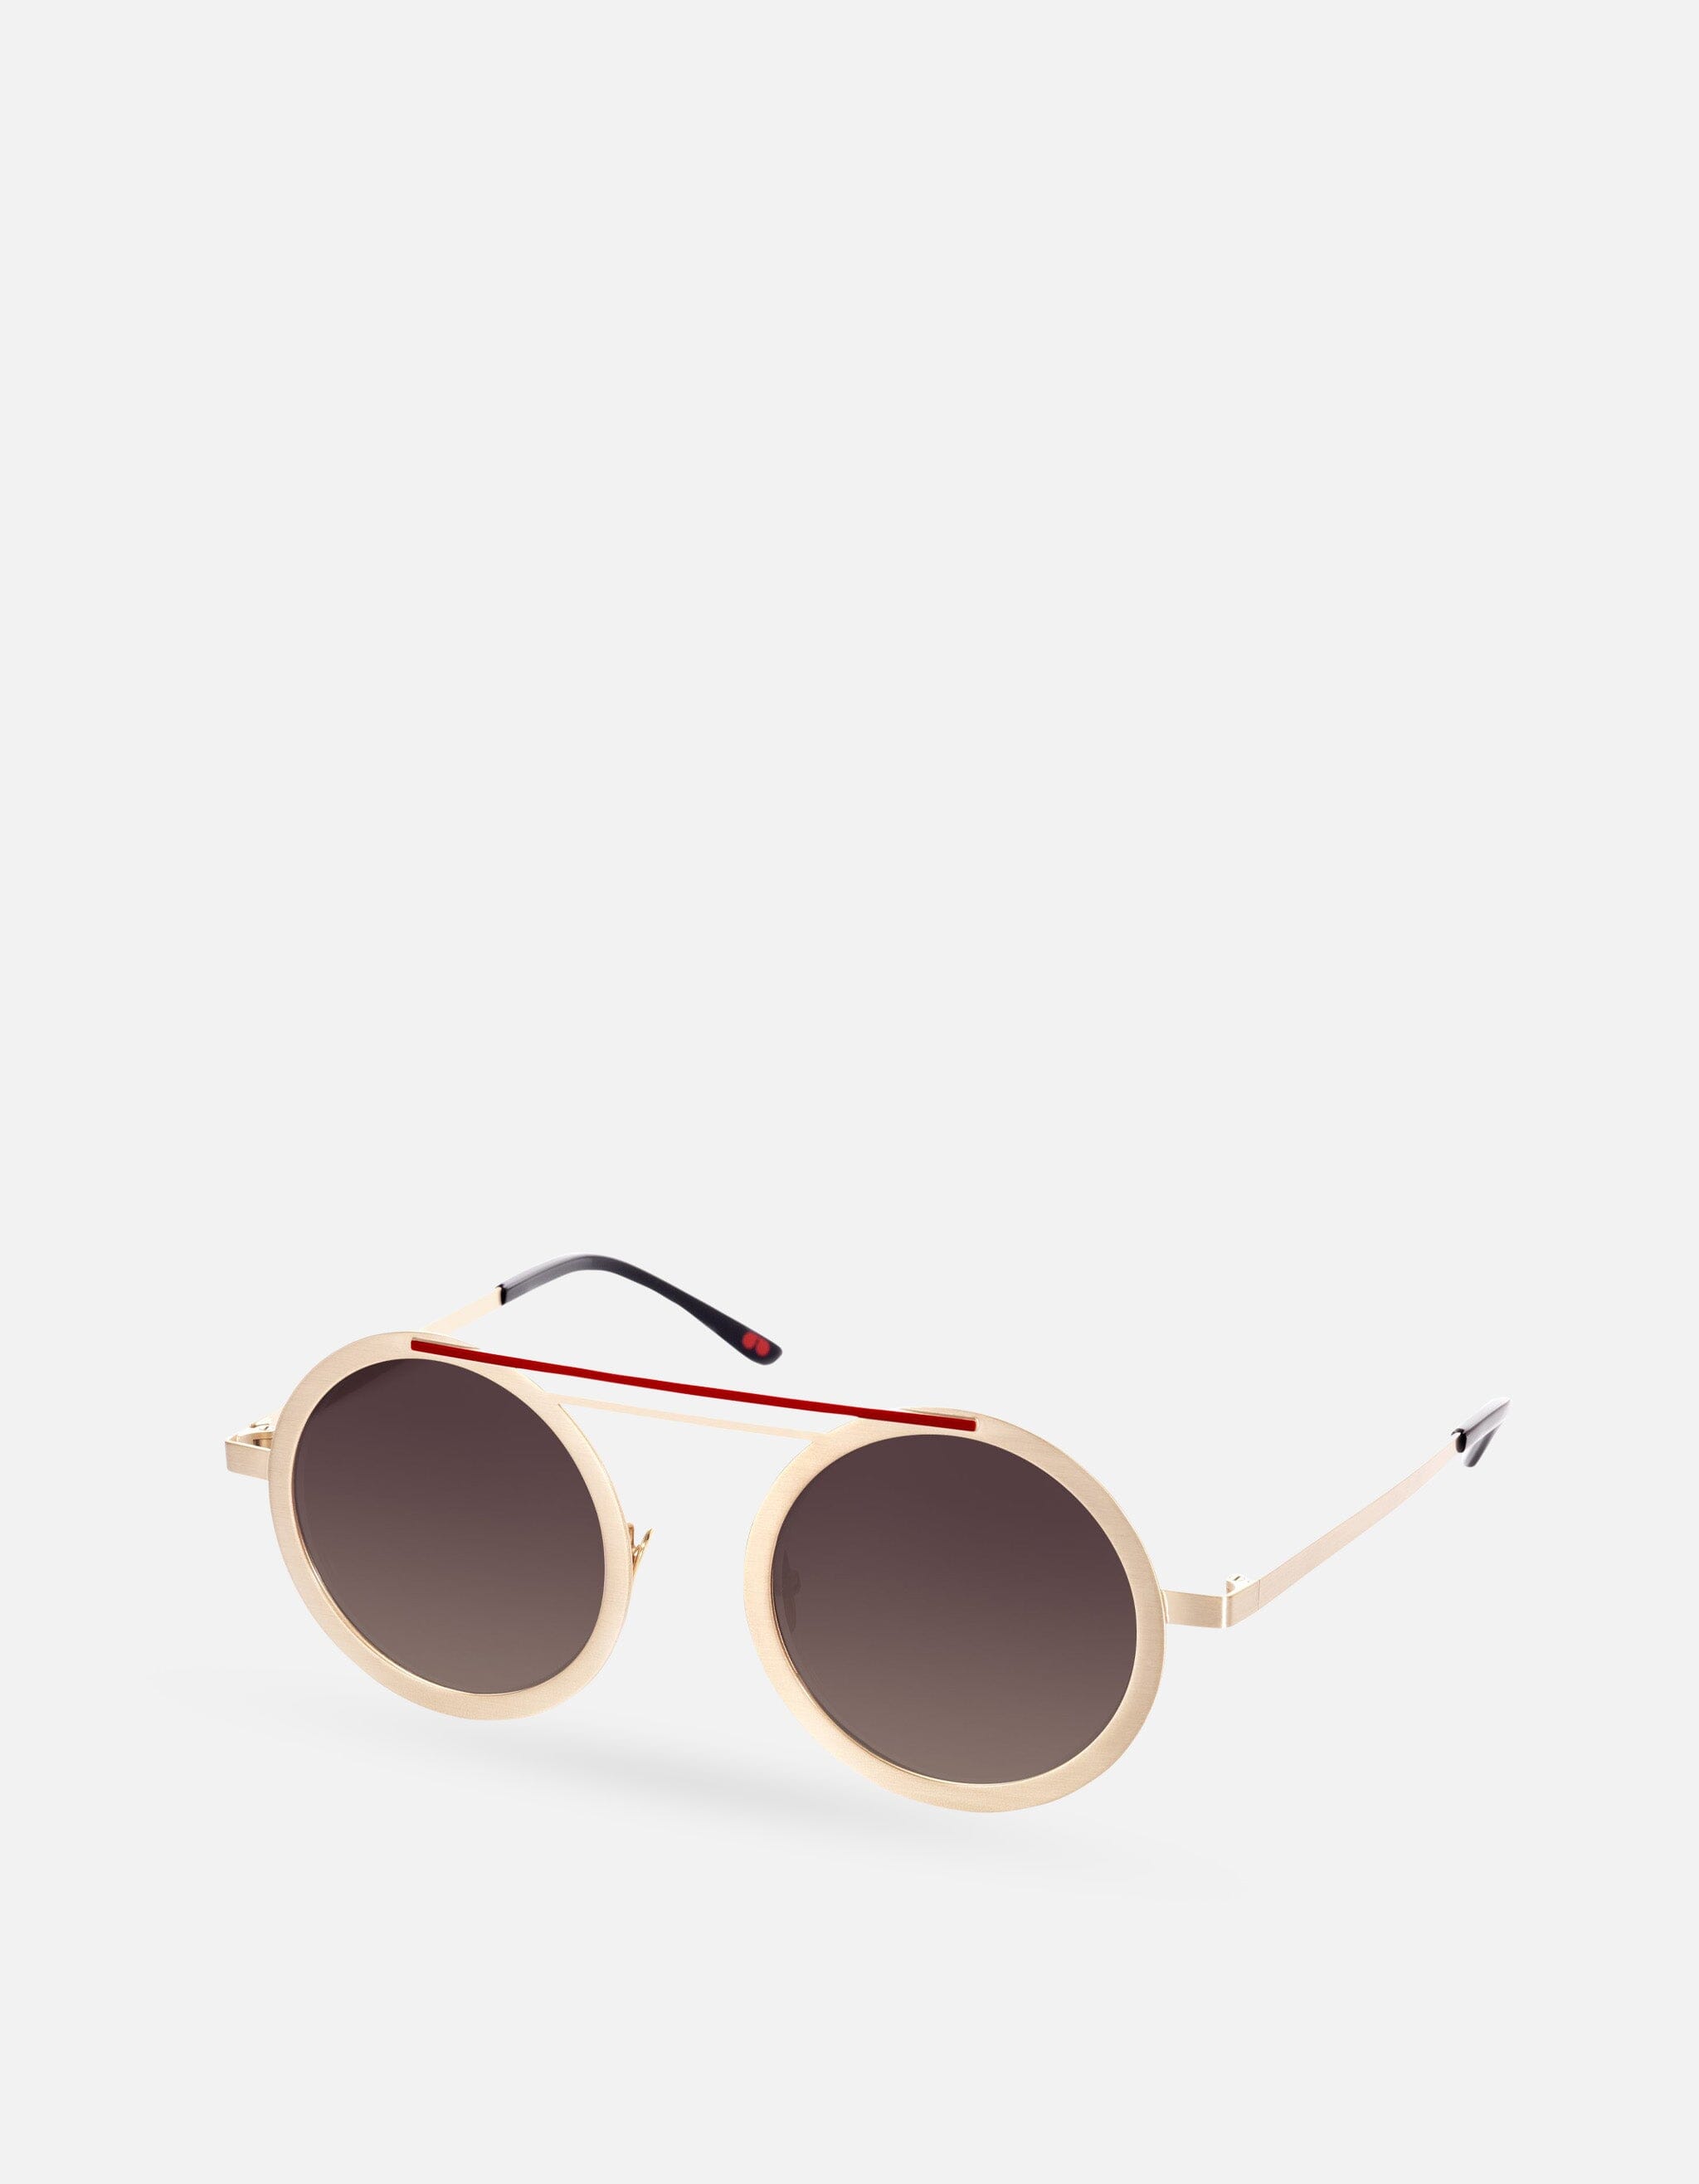 Videnci - Champagne Sunglasses - La petite lunette rouge MACKEENE 